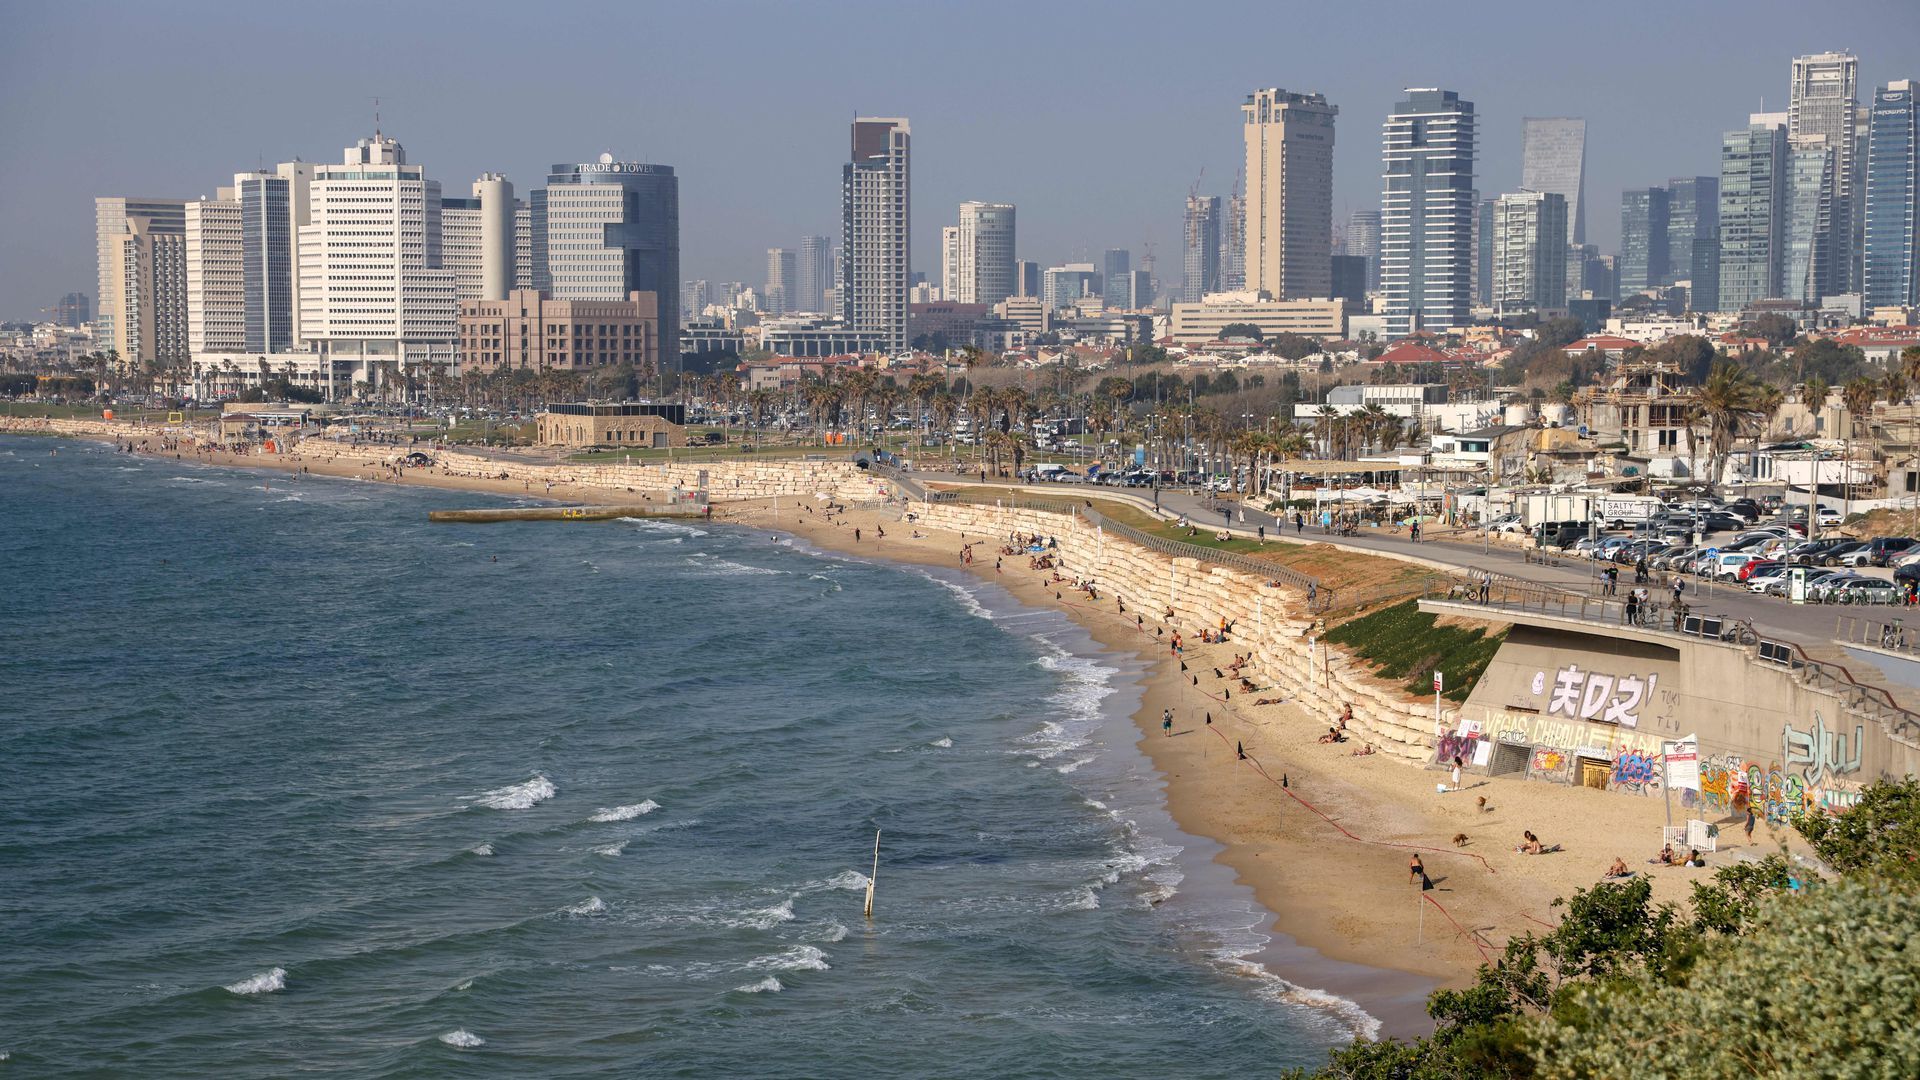 The Tel Aviv skyline